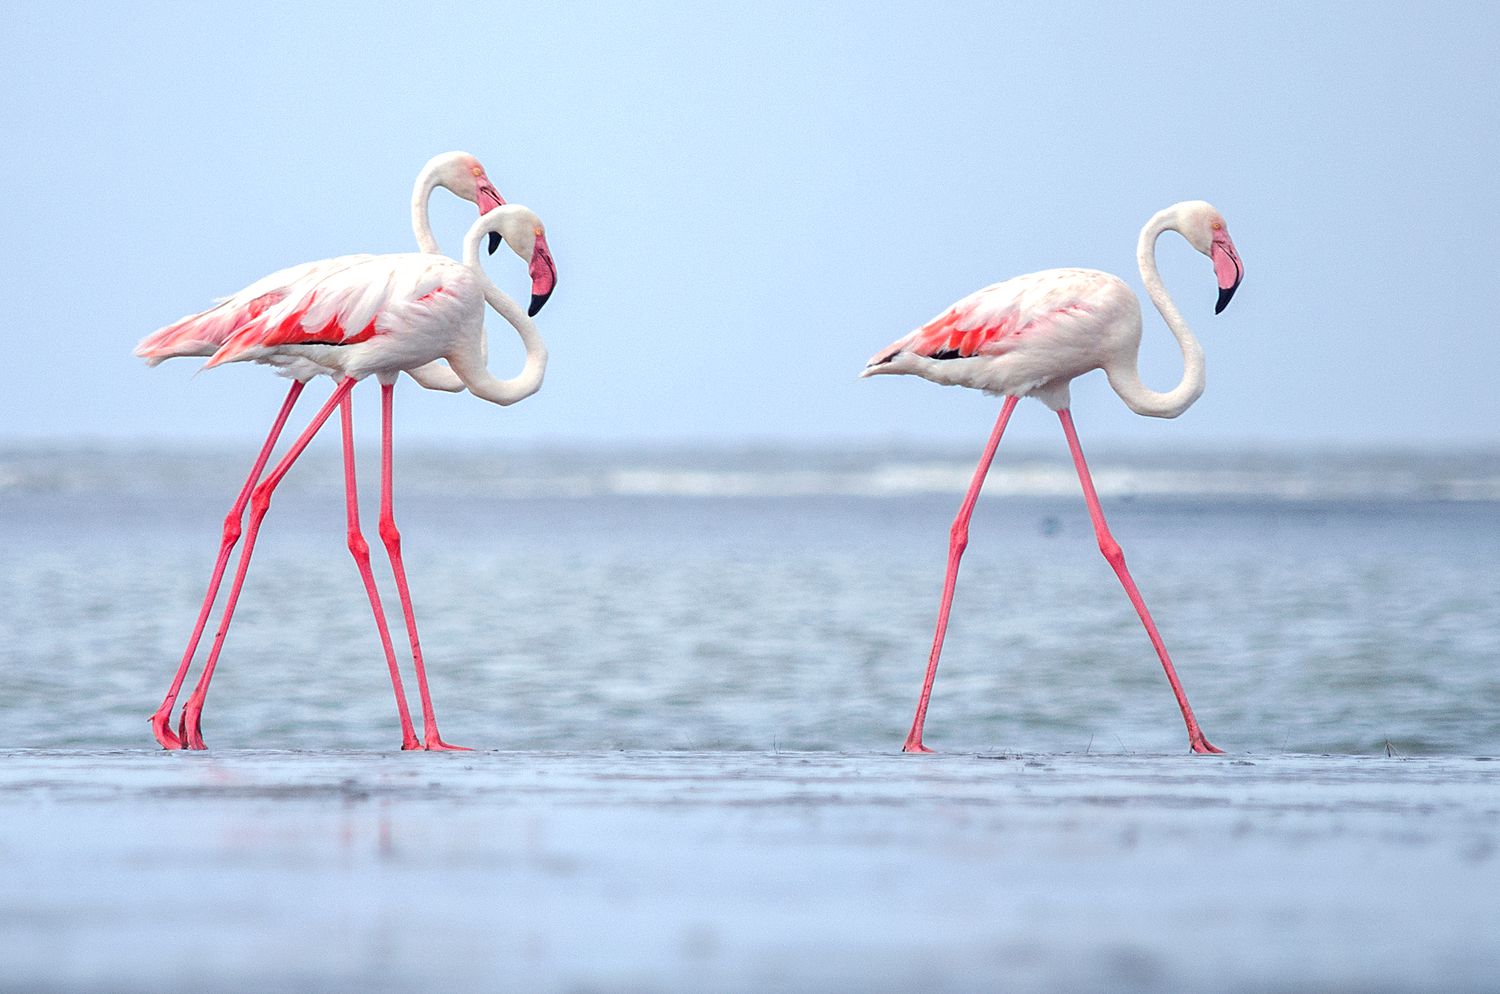 A natural reserve for flamingos